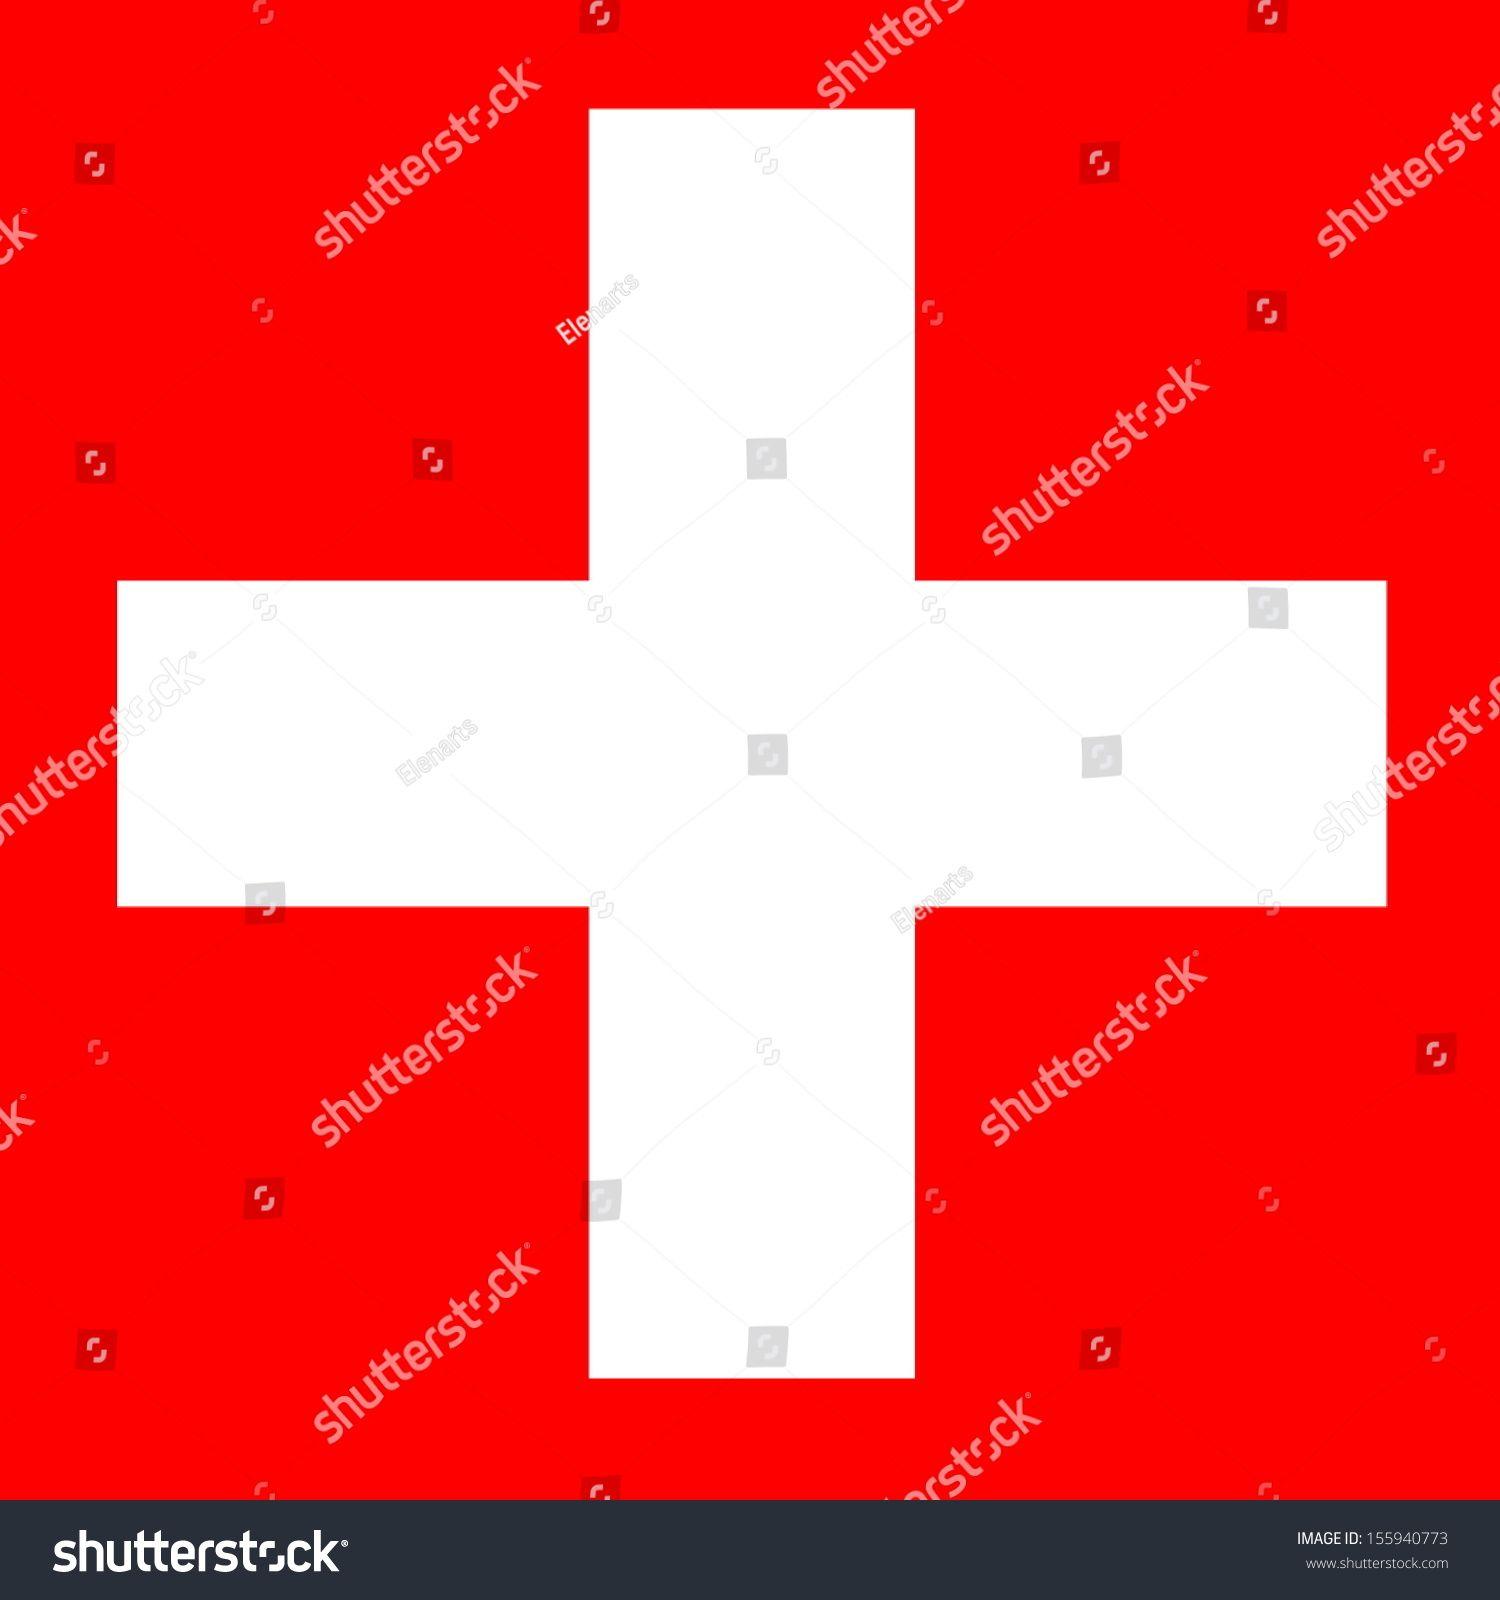 White Swiss Cross Red Background Logo - White cross red background Logos